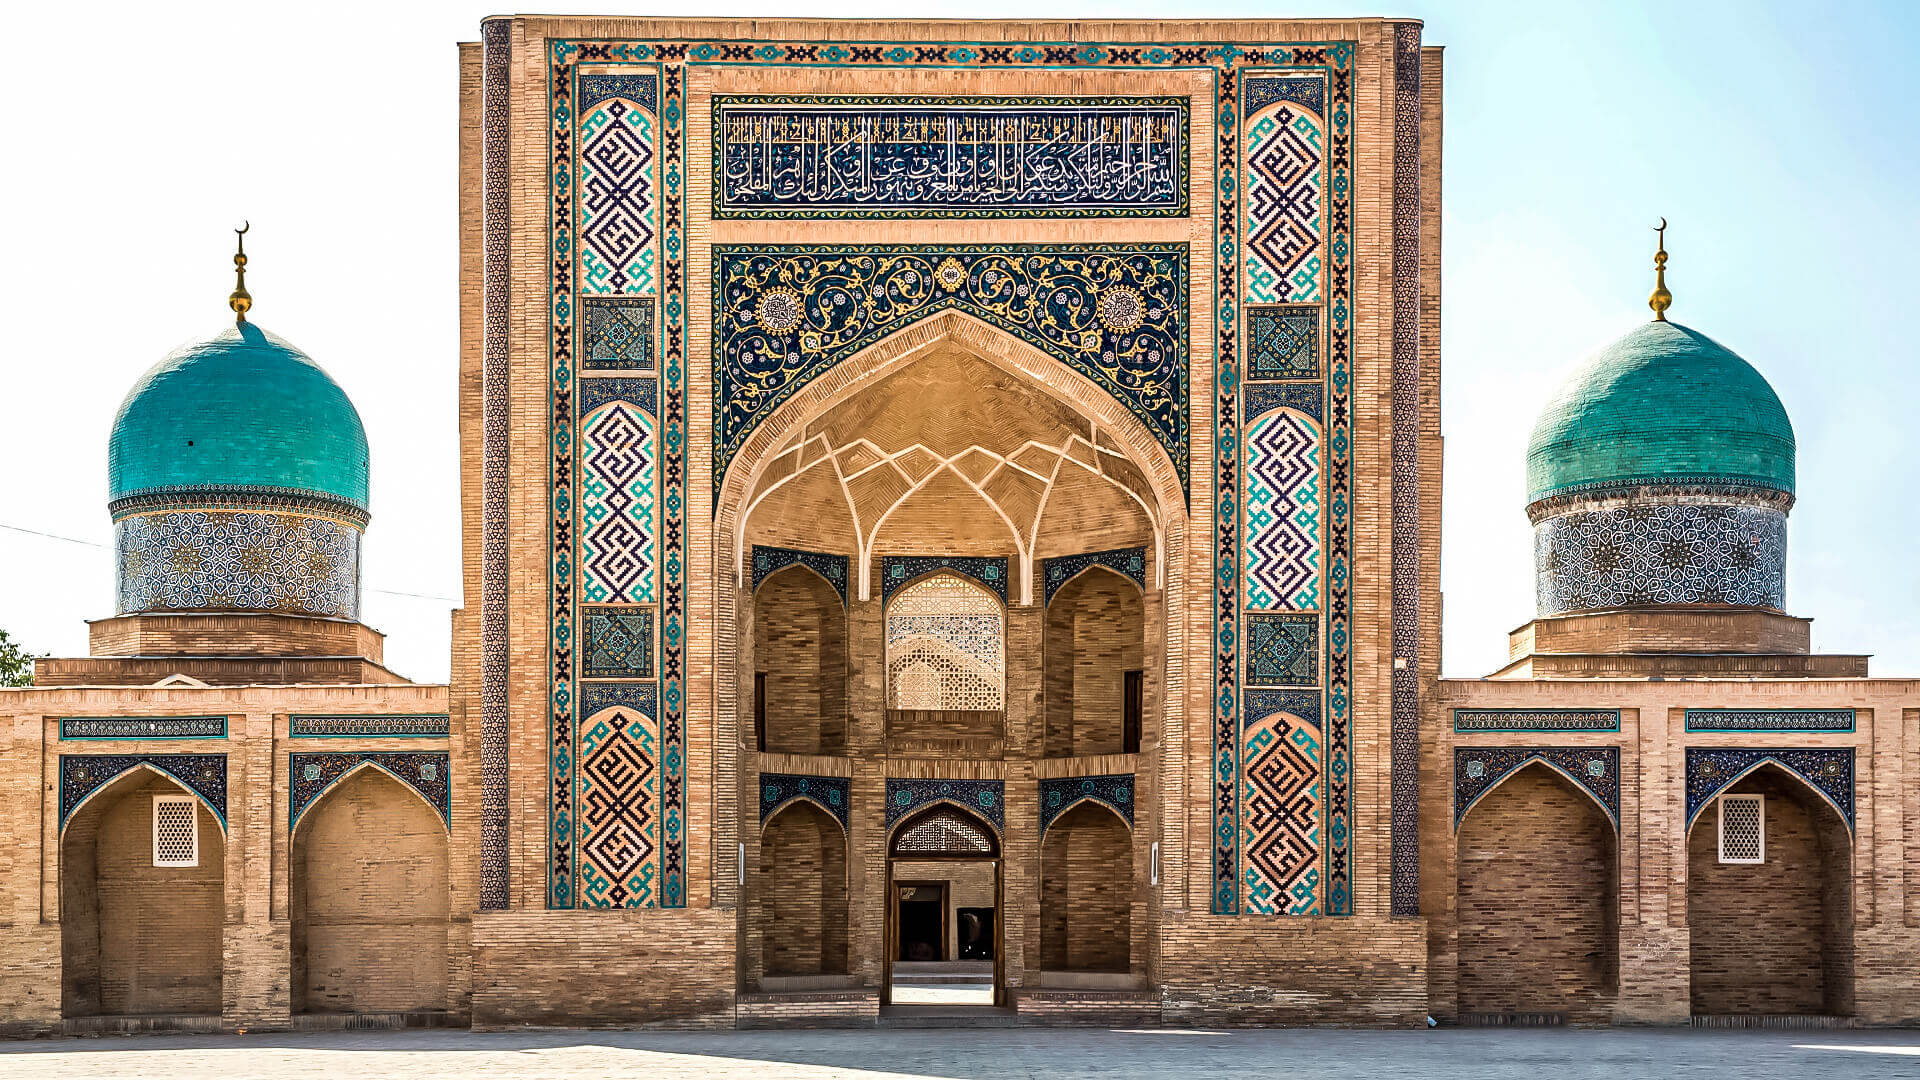 Uzbekistan travel guide - Travel S helper